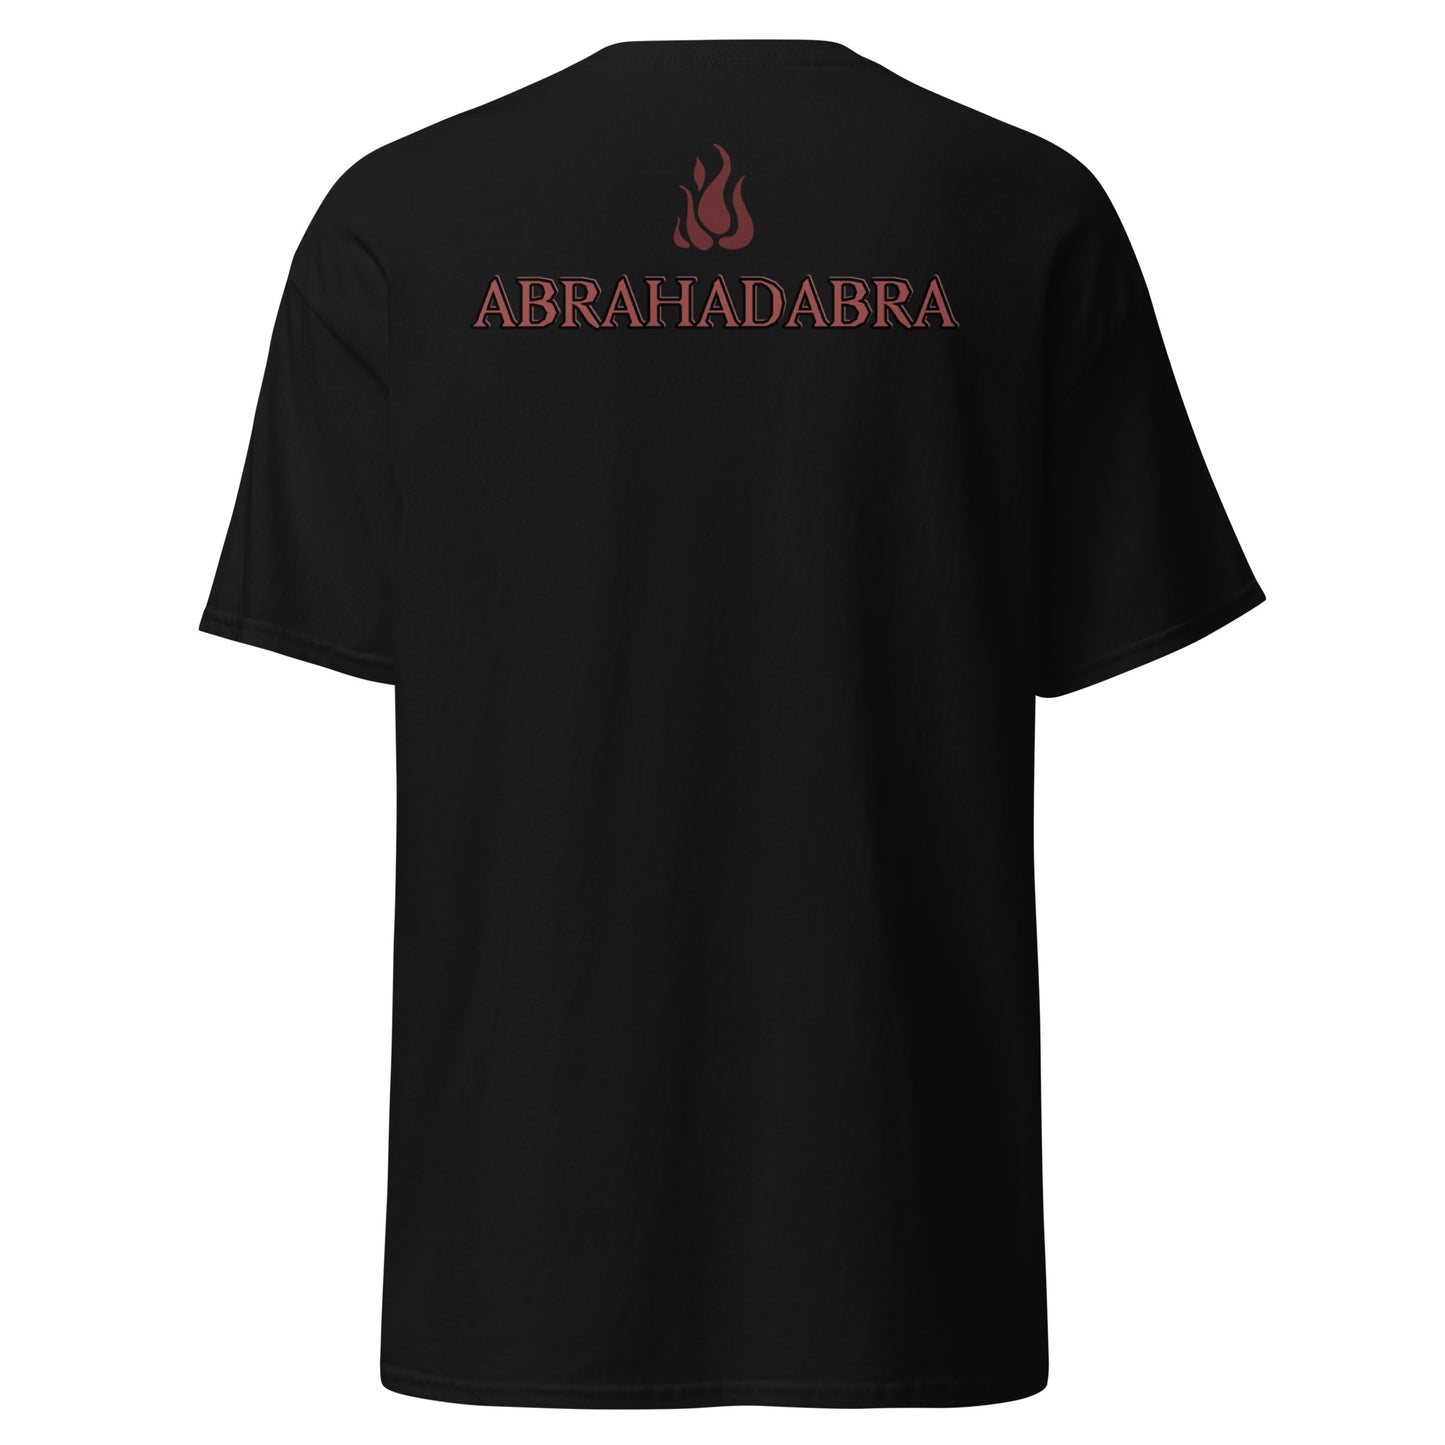 ABRAHADABRA - Men's classic tee